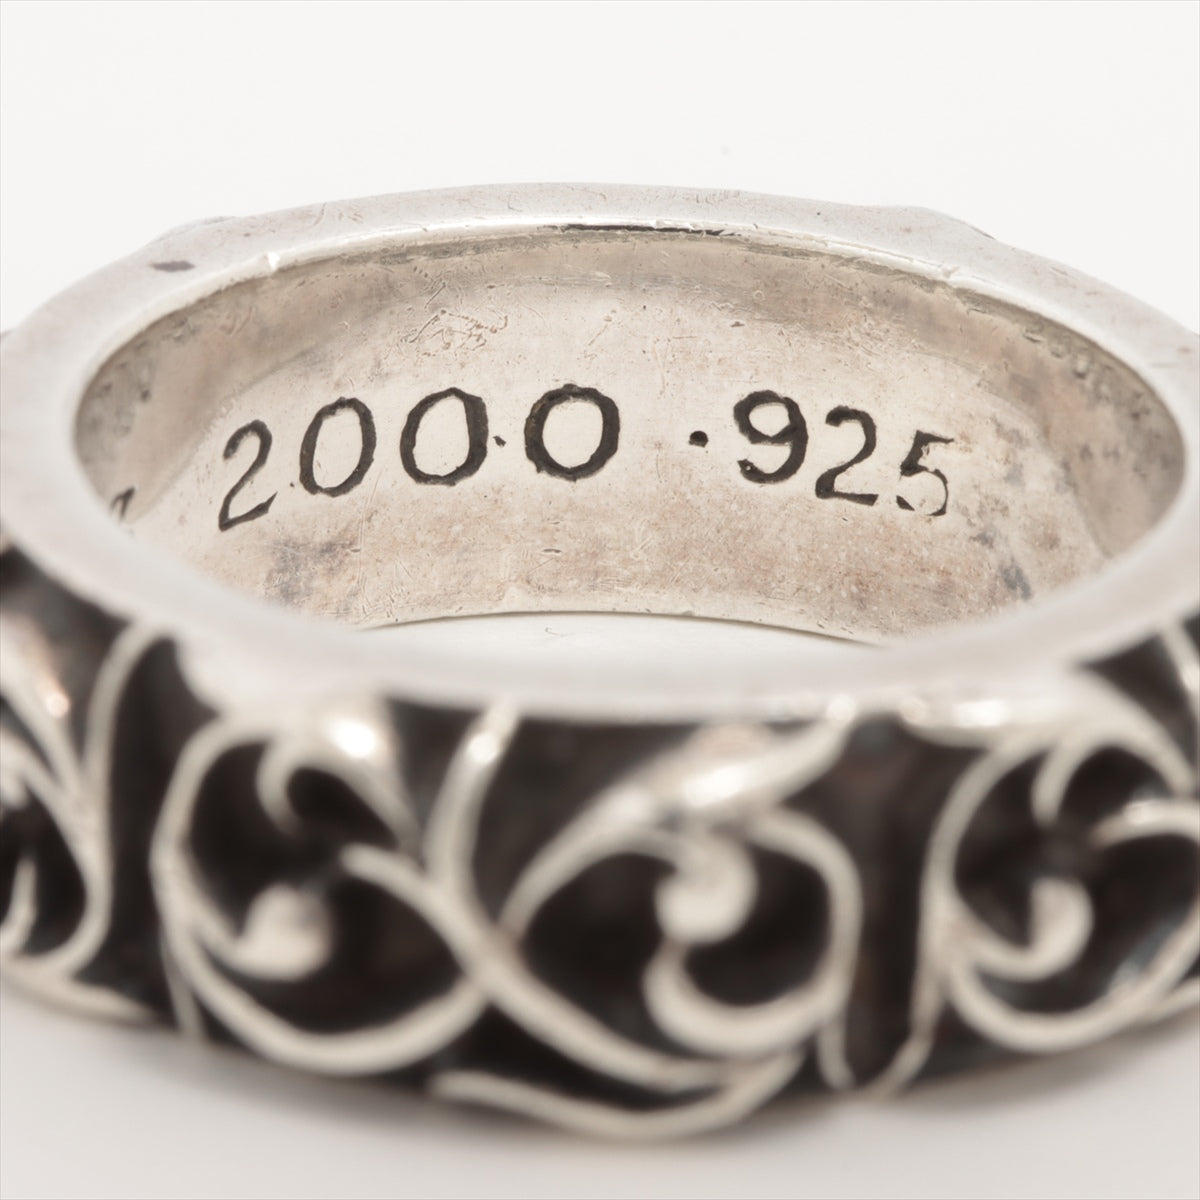 14k Solid Gold Leaf Ring, Minimalist Vine Band, Dainty Gold Ring, 14K